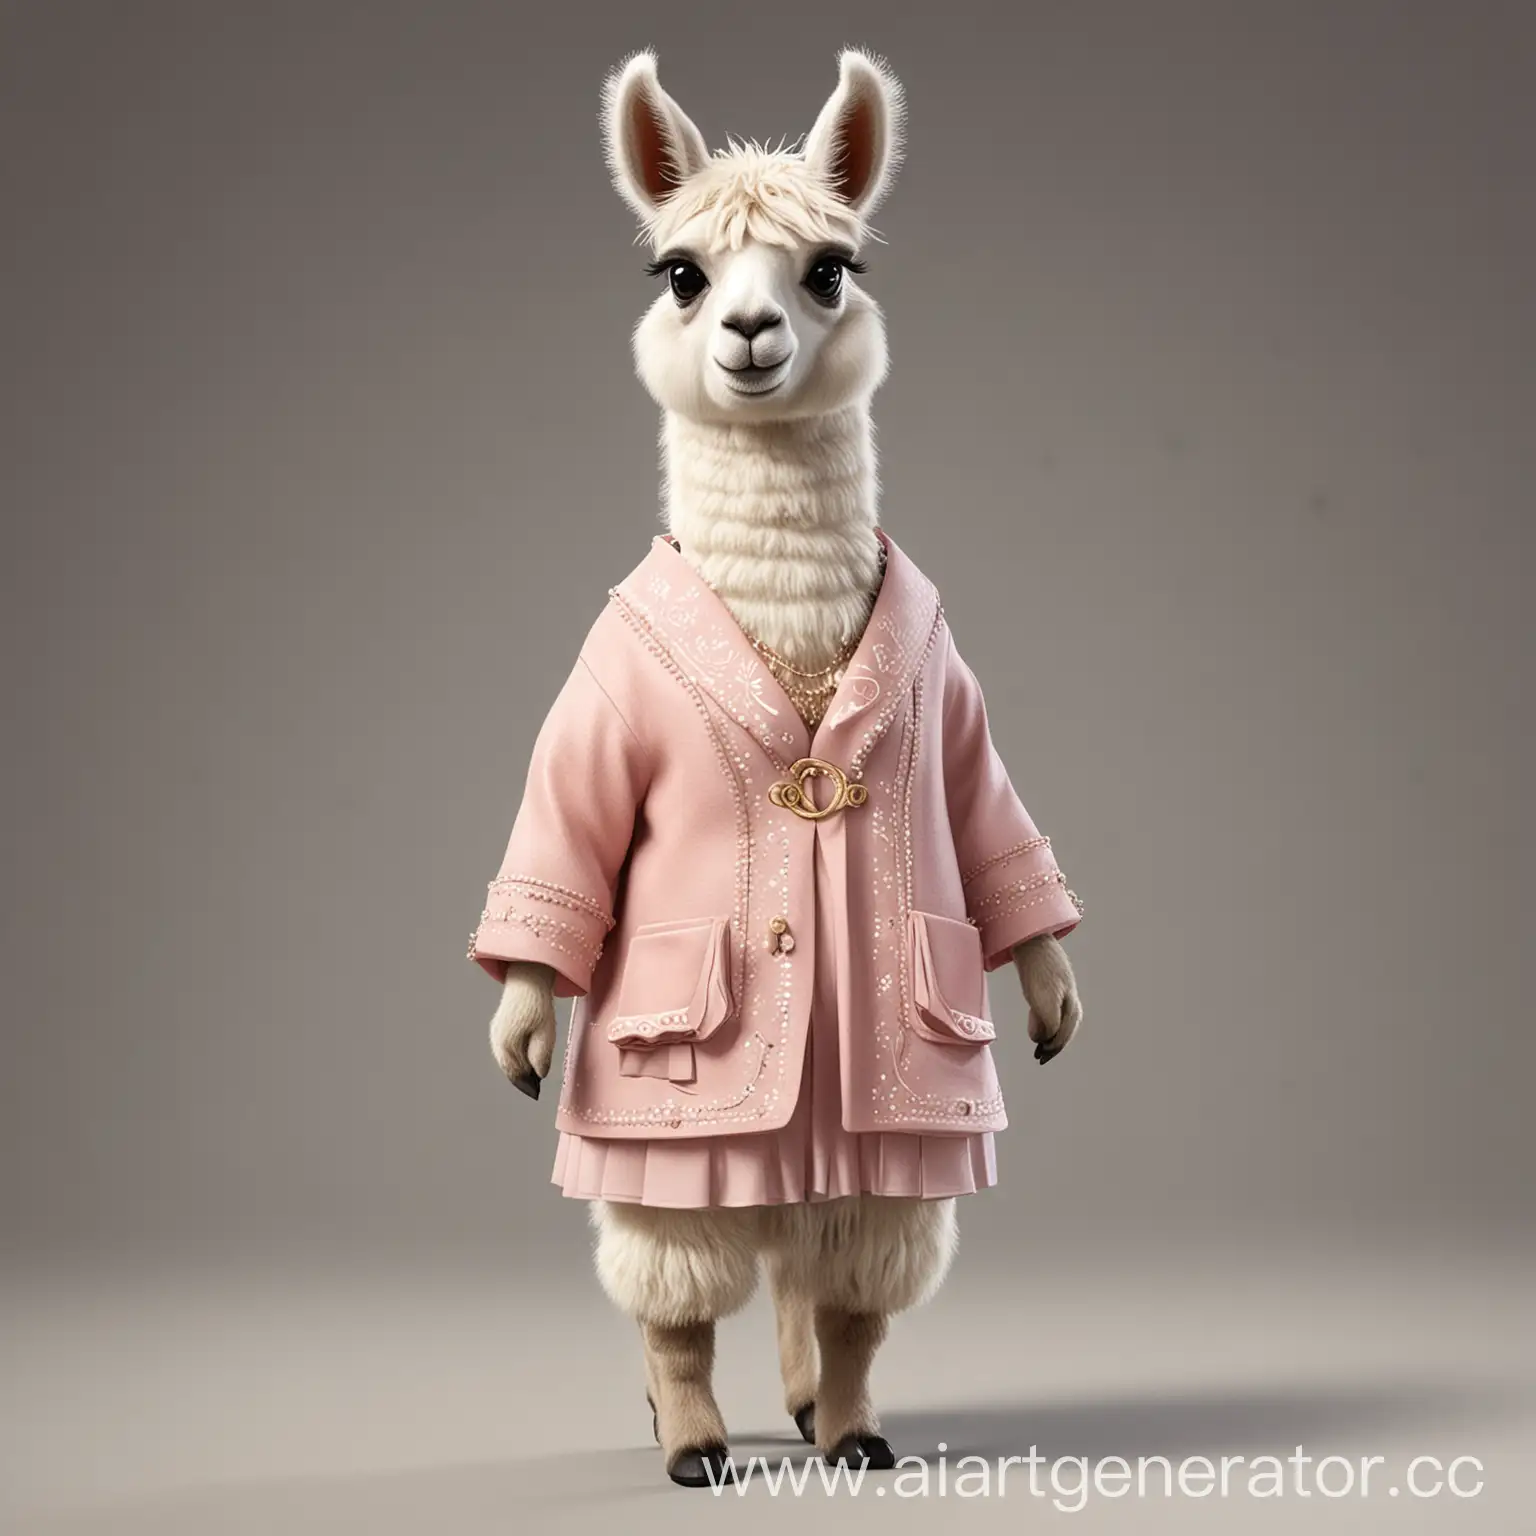 Stylish-Llama-Fashion-Model-in-DiorInspired-Dress